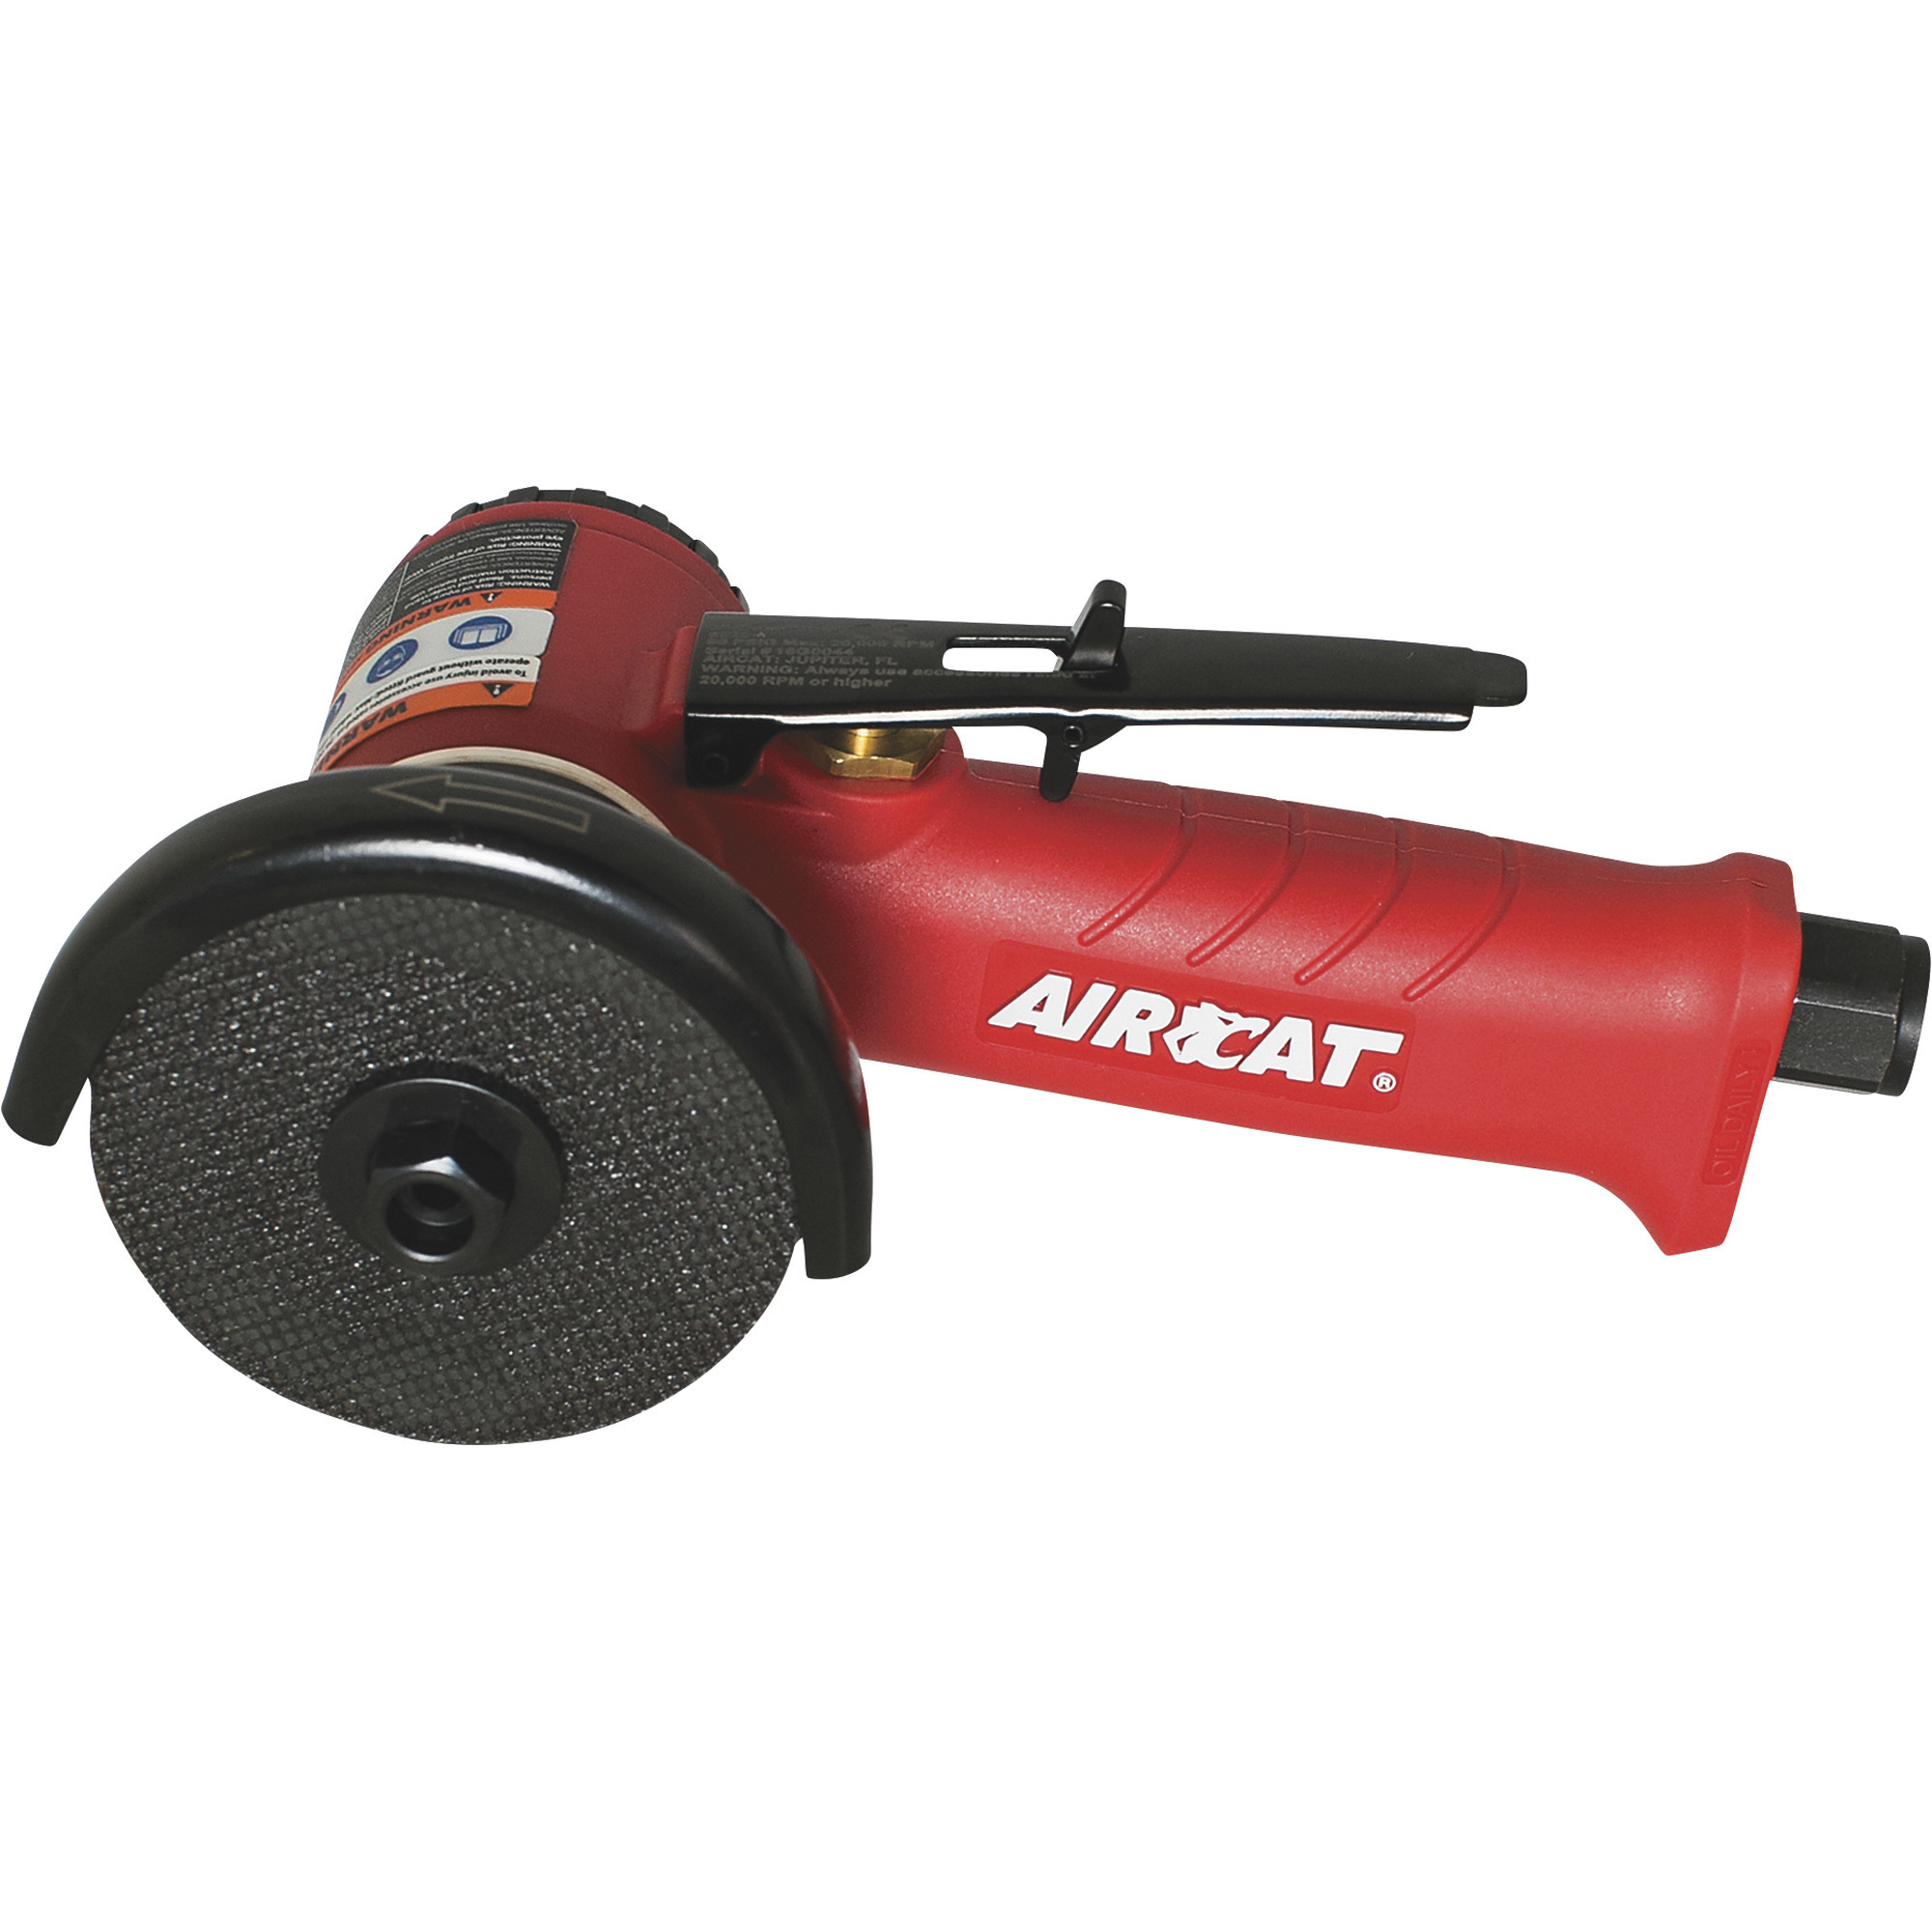 AIRCAT In-Line Air Cutoff Tool, 3Inch Disc, Indexible Guard, 18,000 RPM, Model 6525-A